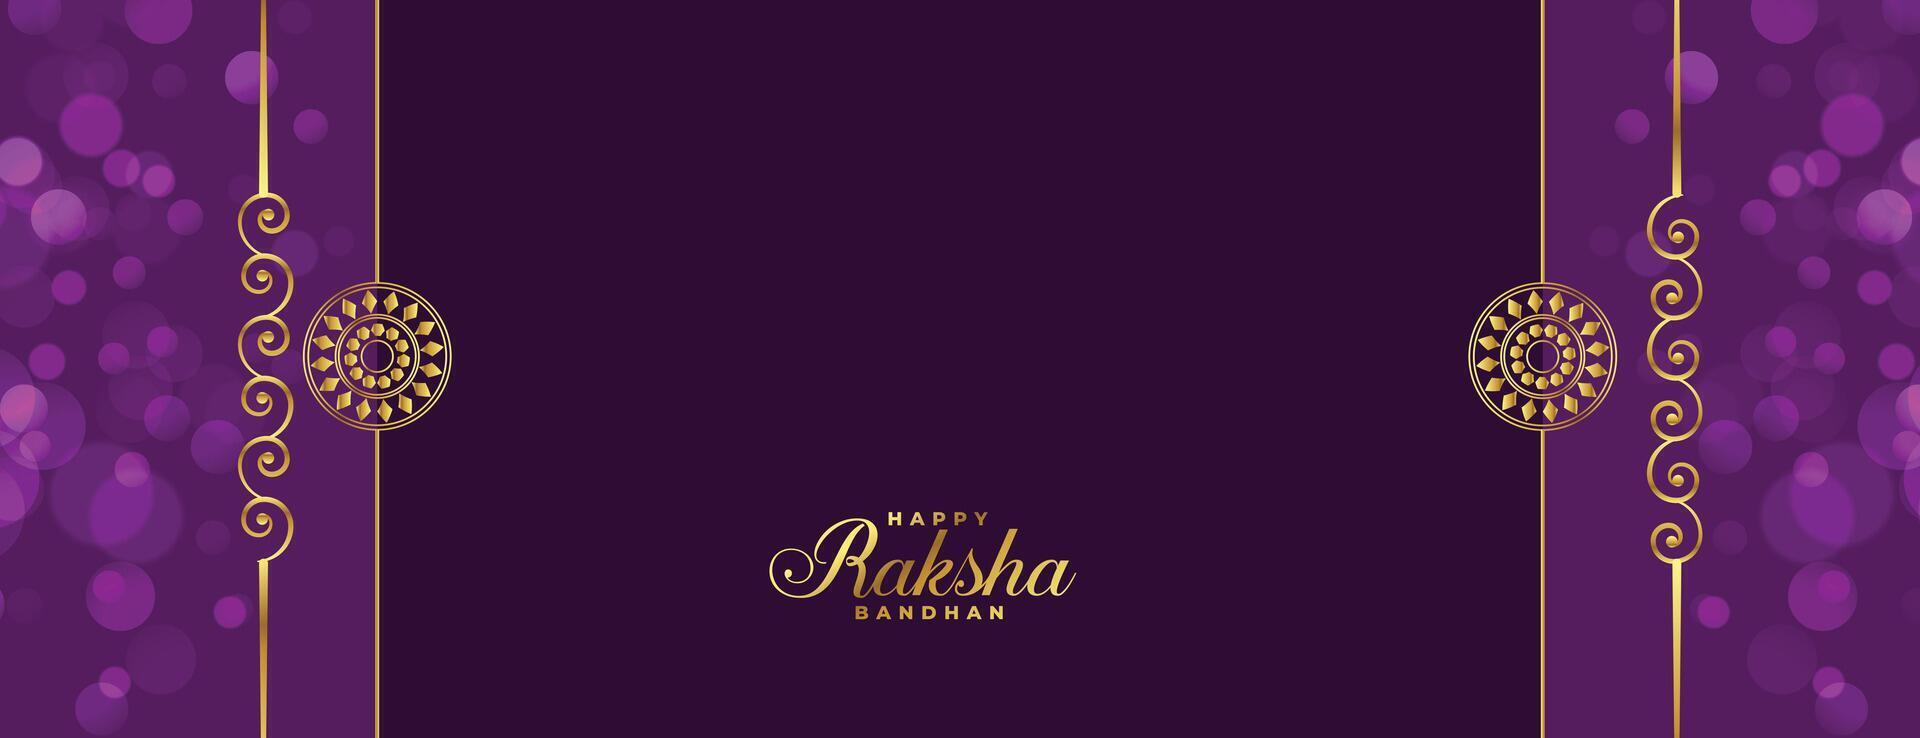 raksha Bandhan indio festival púrpura bandera diseño vector